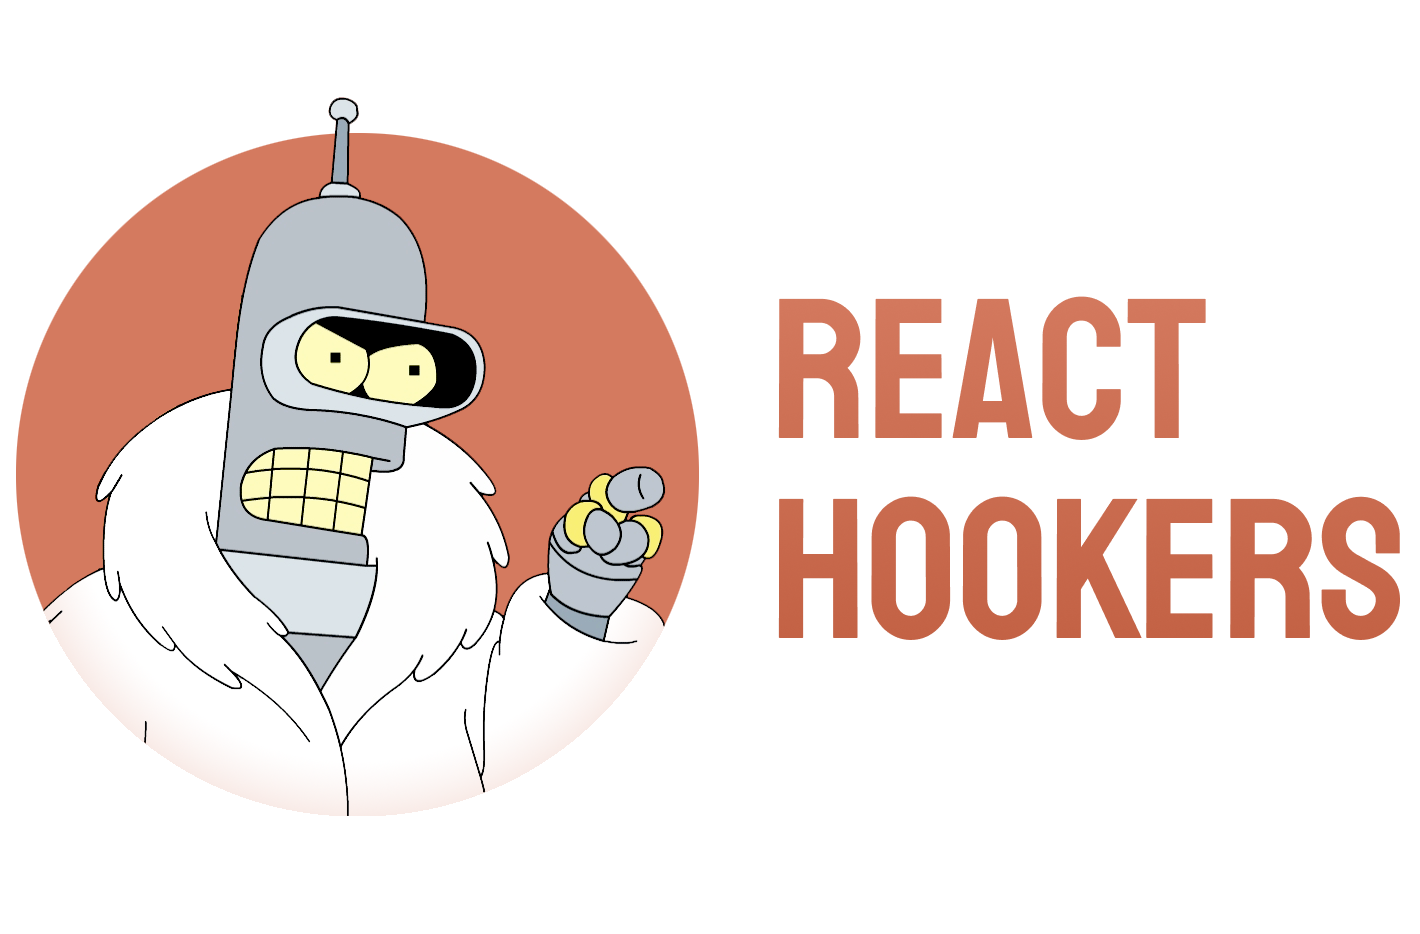 React Hookers